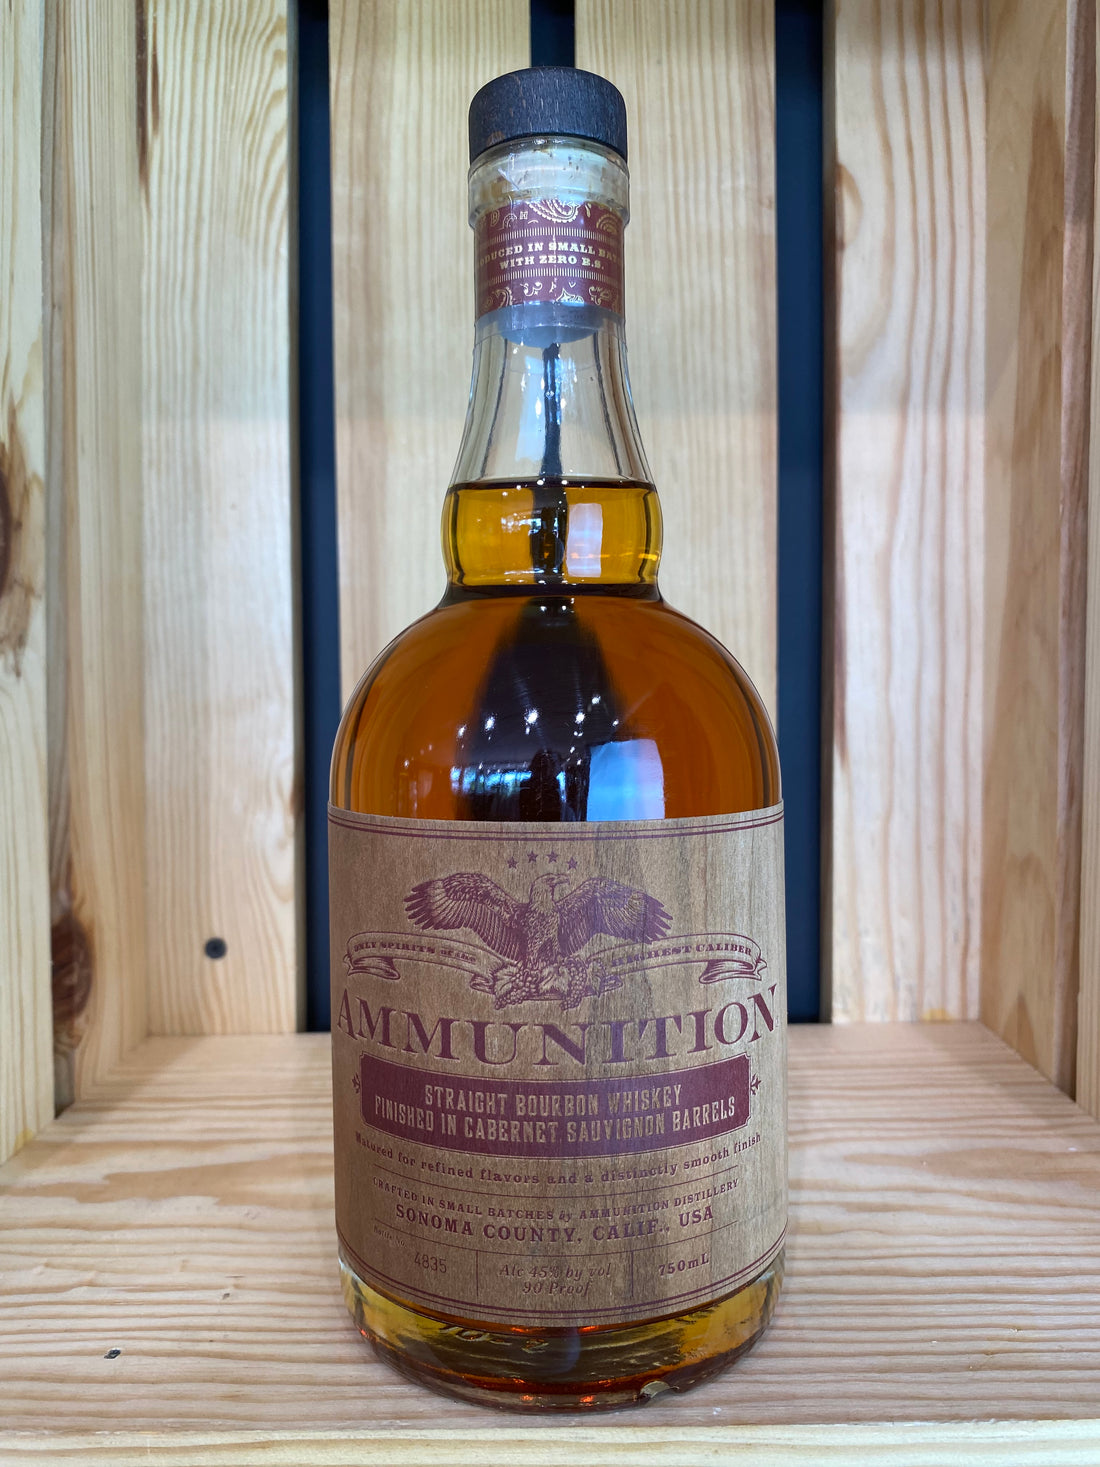 Ammunition Bourbon